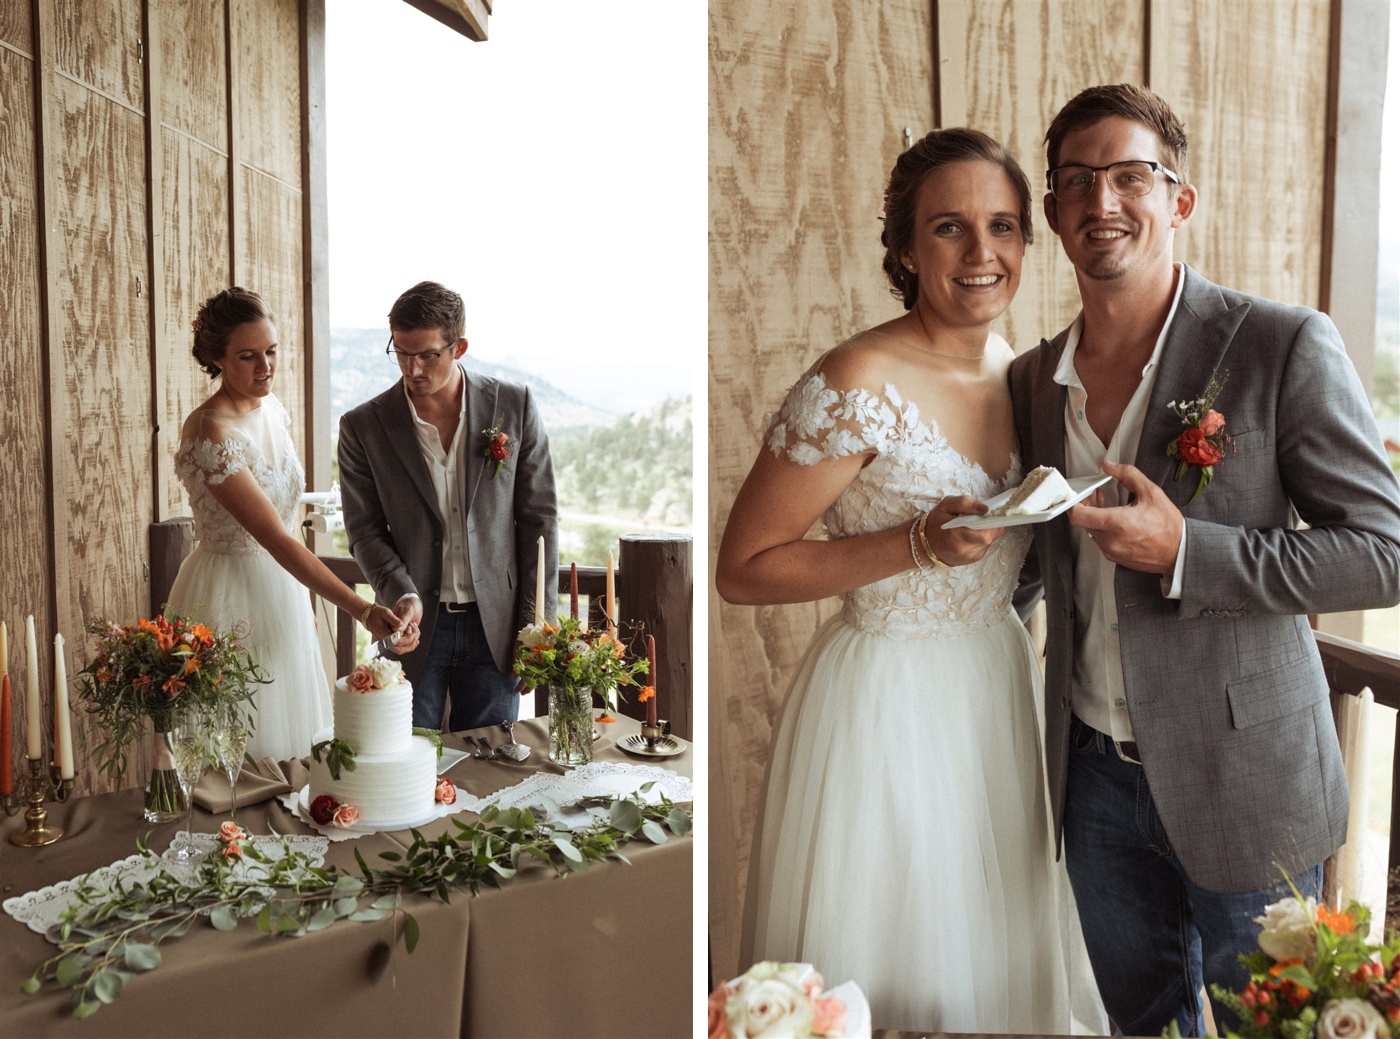 Wedding reception on the patio at Taharaa Mountain Lodge